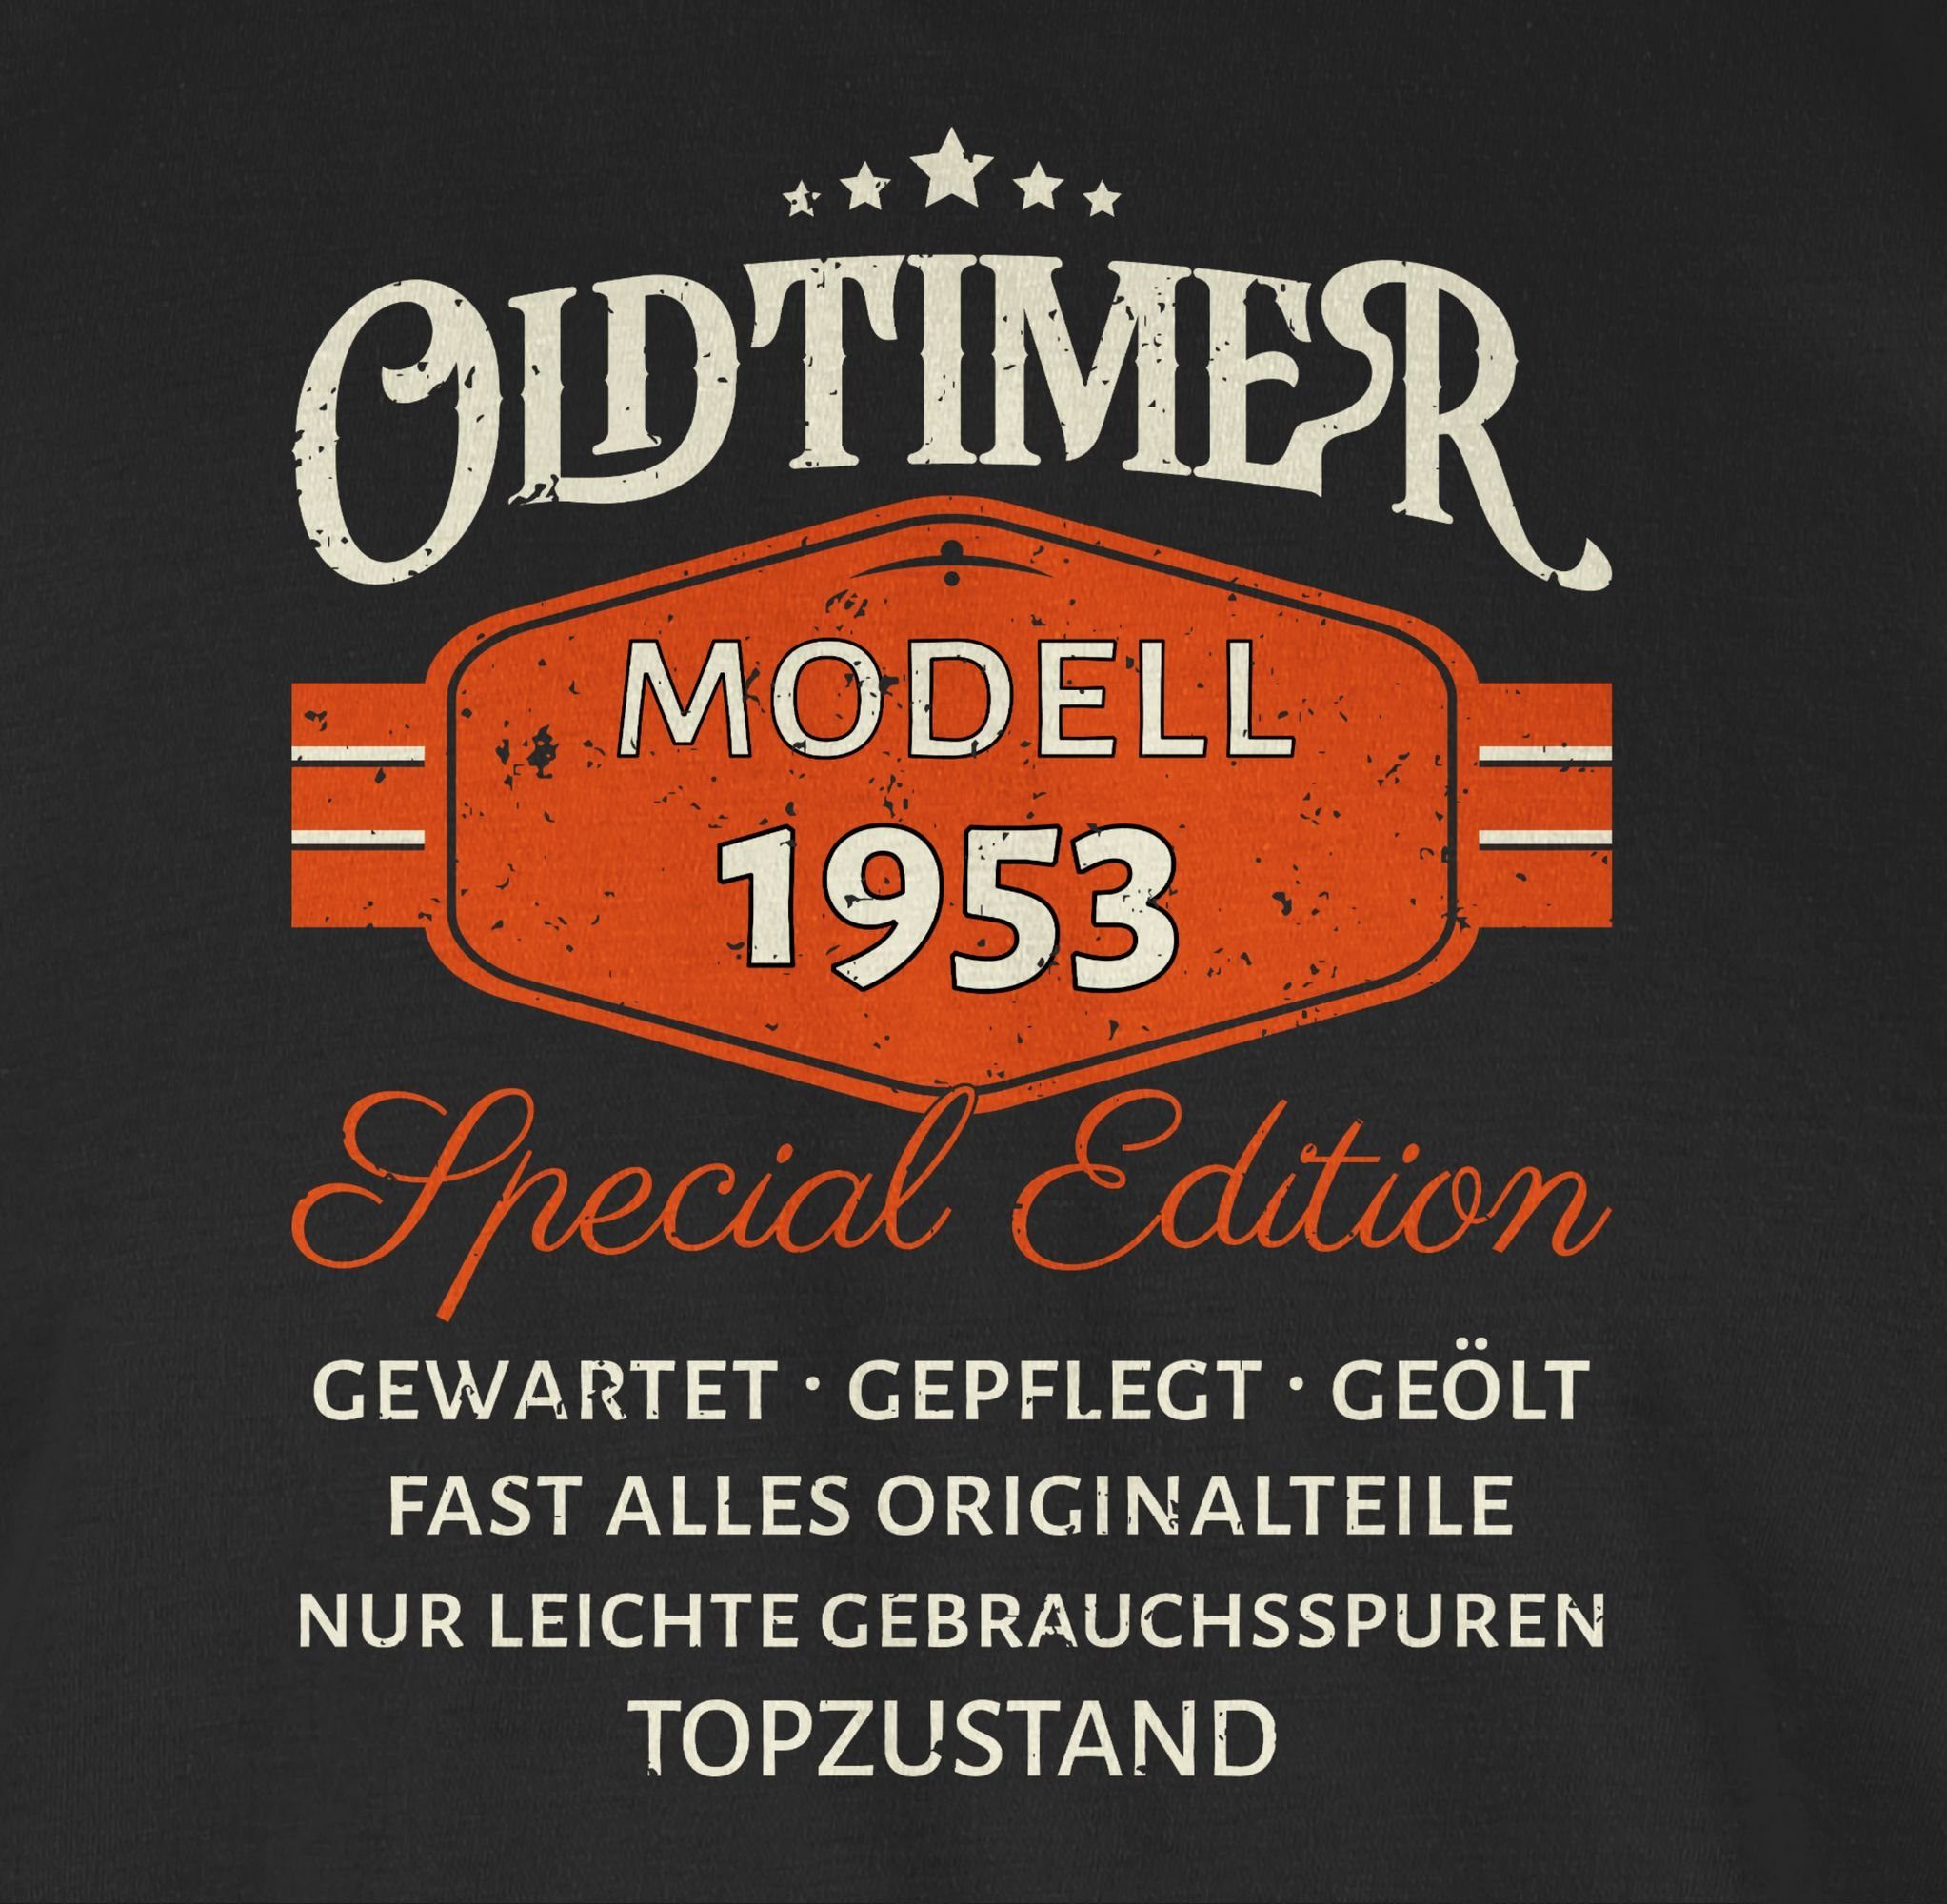 70. Modell Oldtimer Edition T-Shirt Shirtracer 1953 Original 01 Geburtstag Special Schwarz